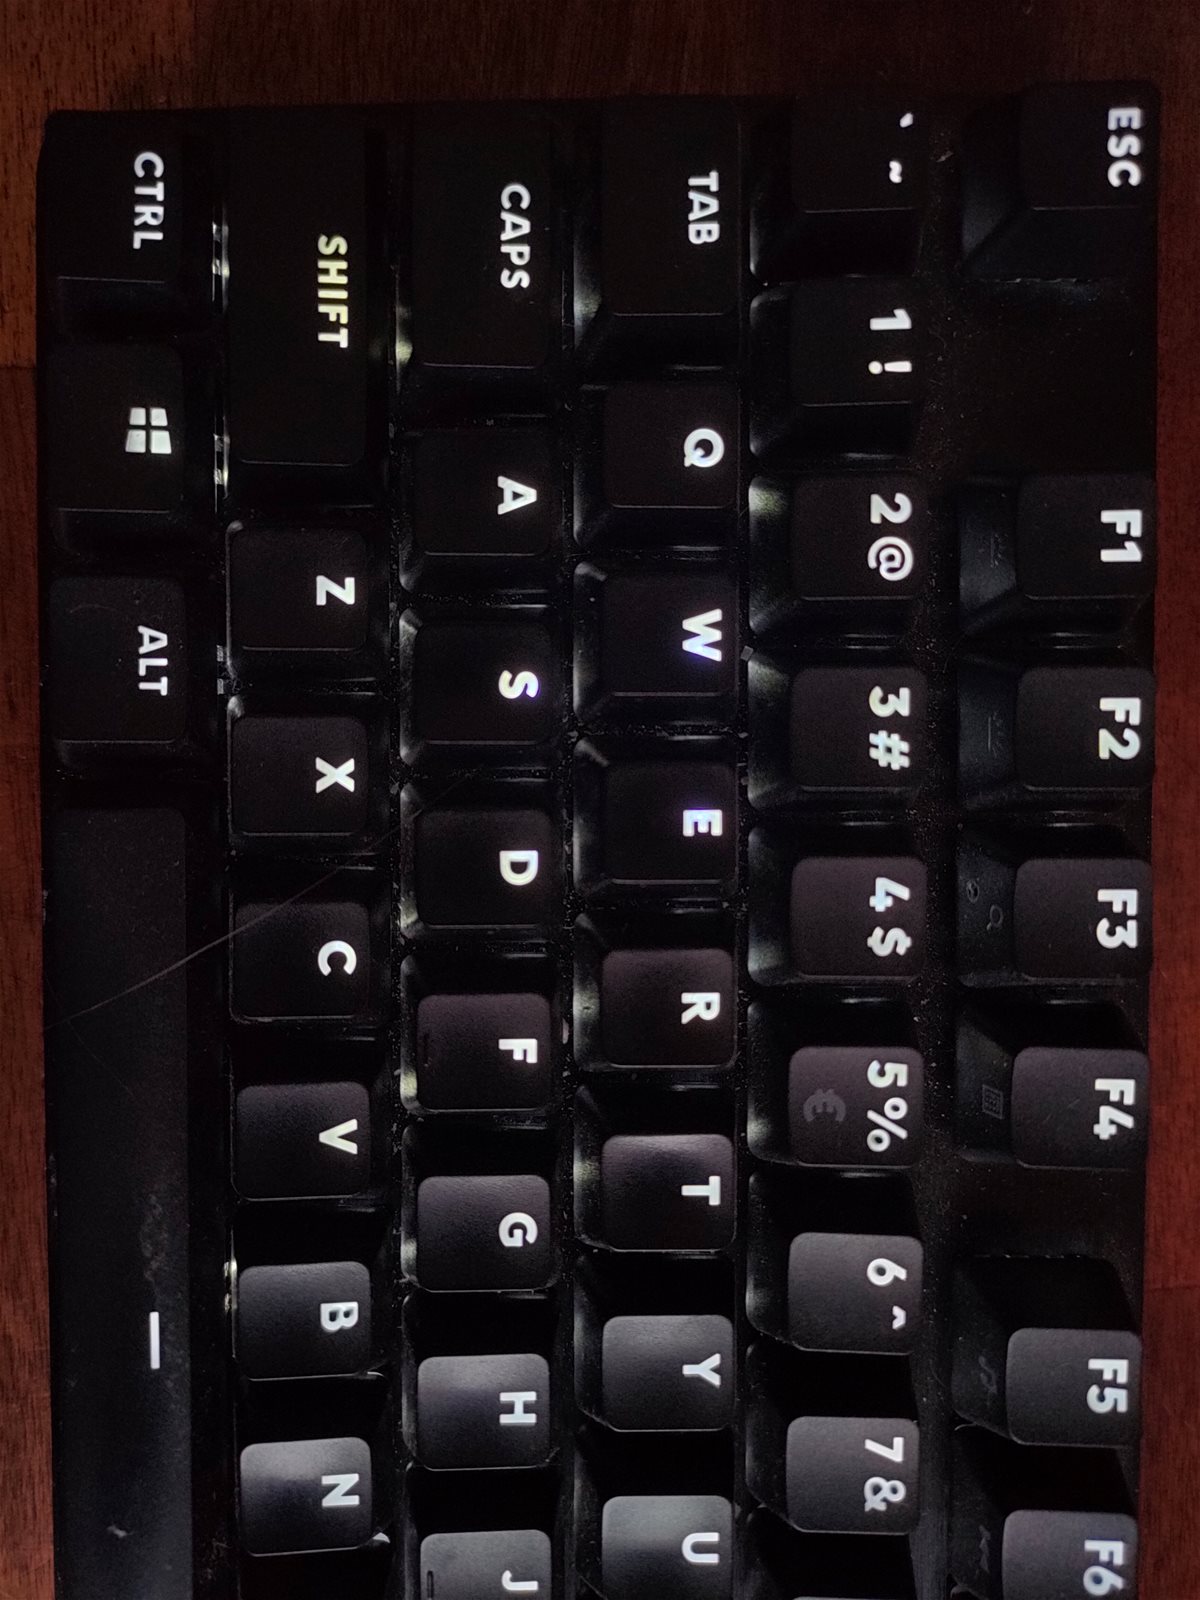 Logitech G413 TKL SE Keyboard Review - Minimalist Gaming